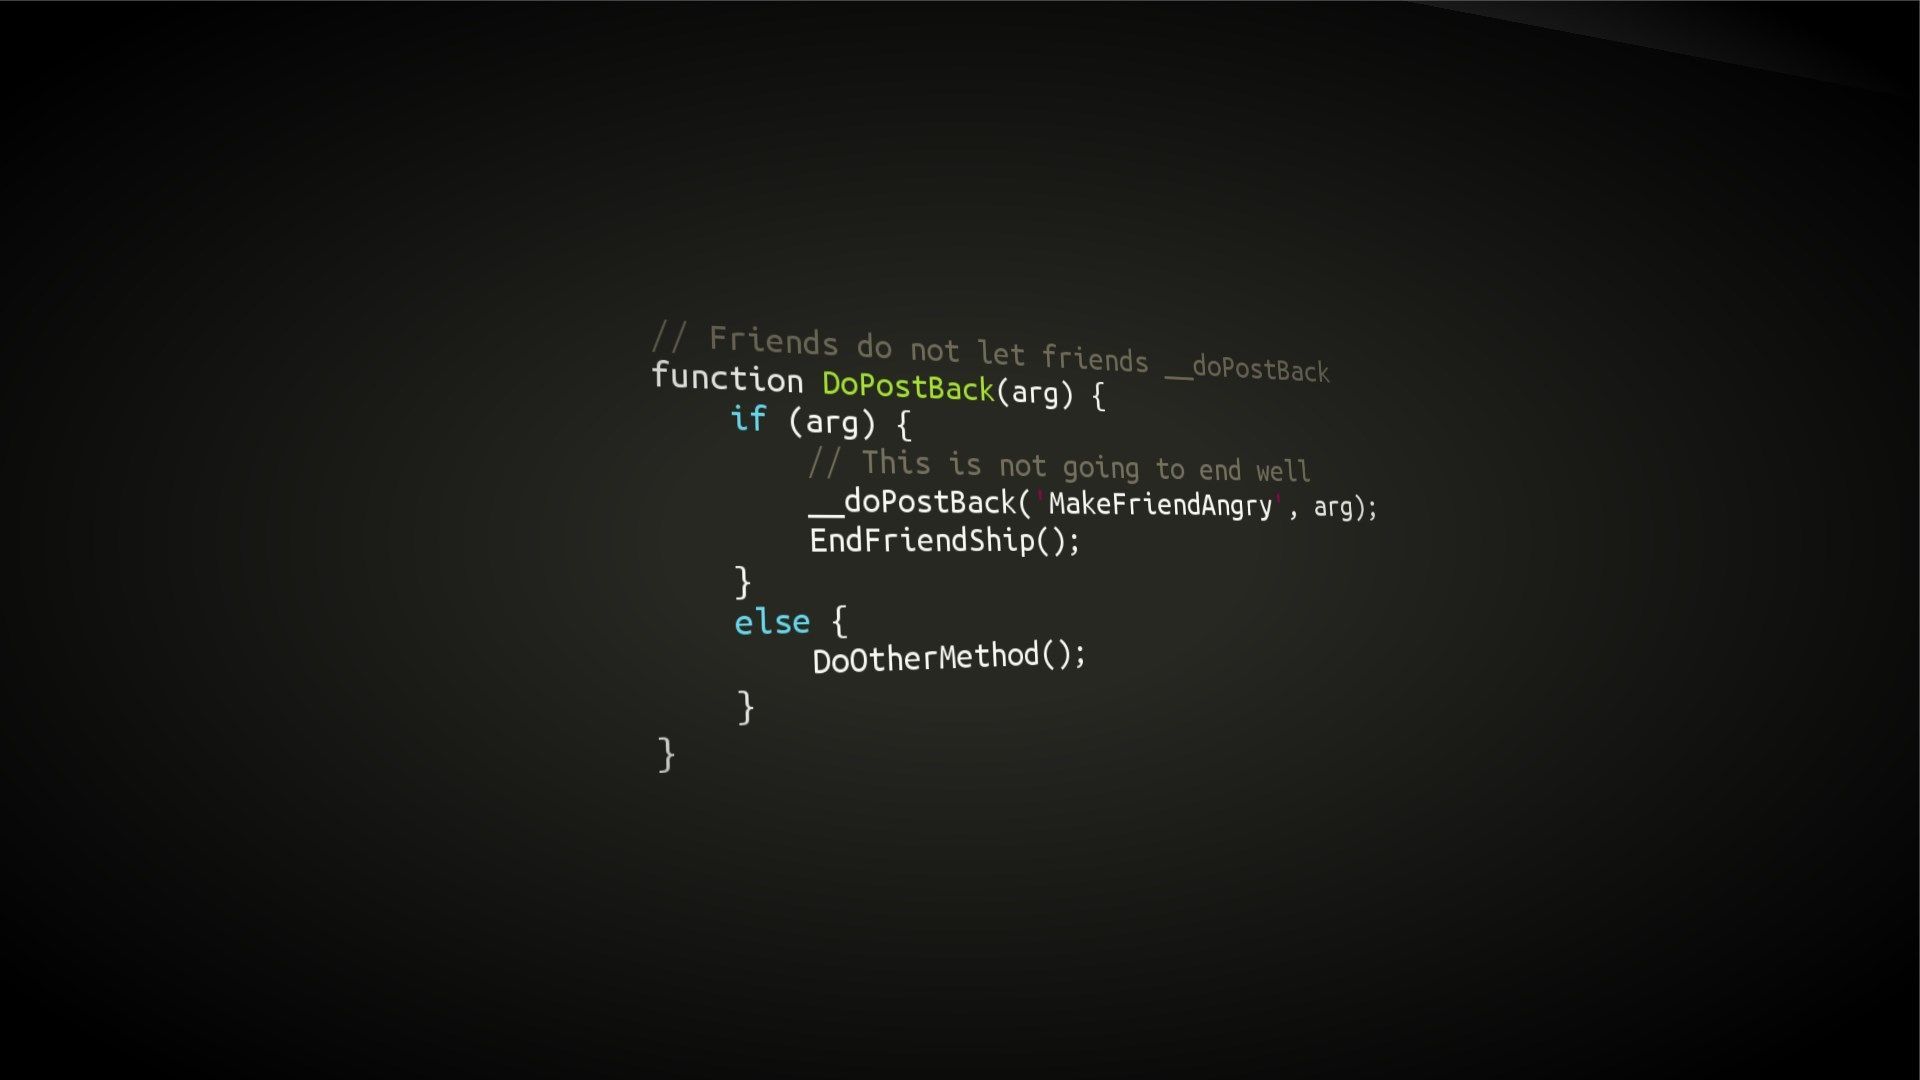 Code wallpaper. Code wallpaper, Programming quote, HD background